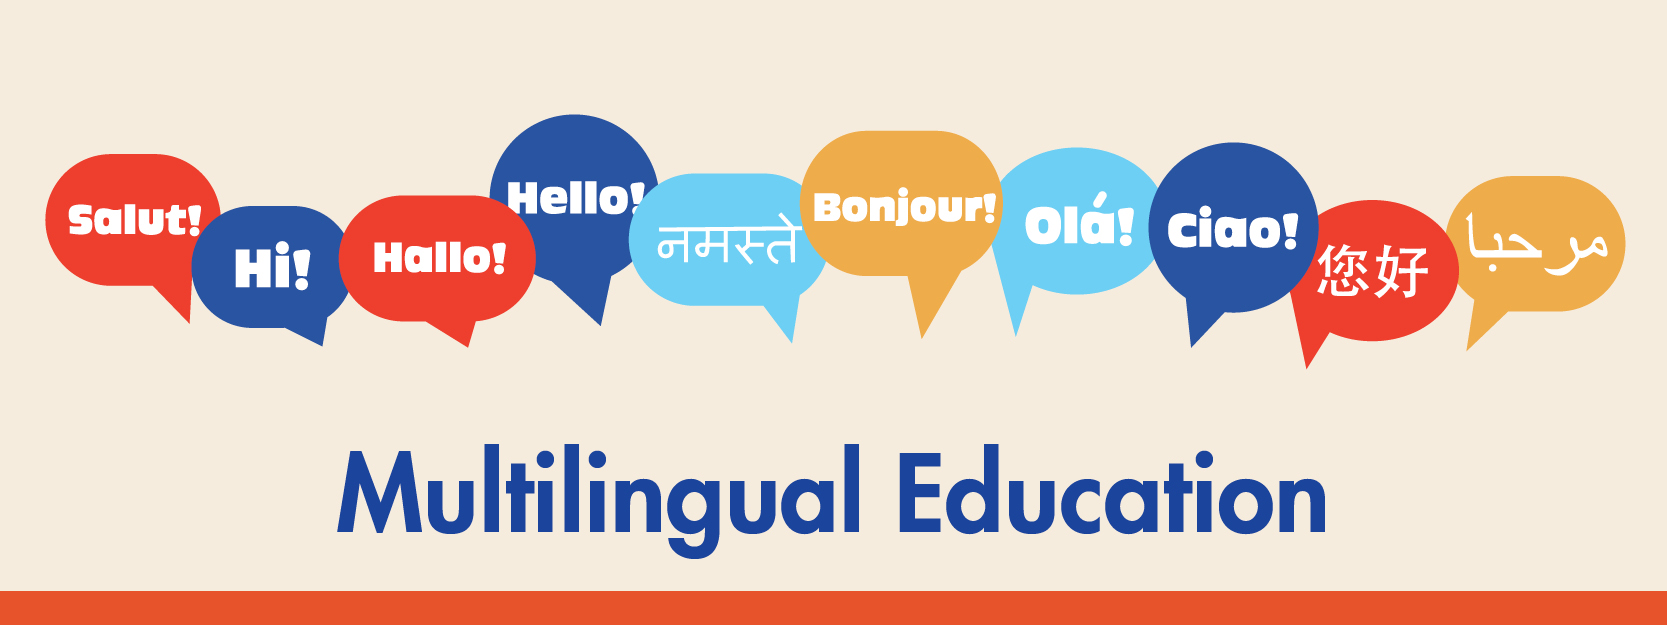 Multilingual Education, various